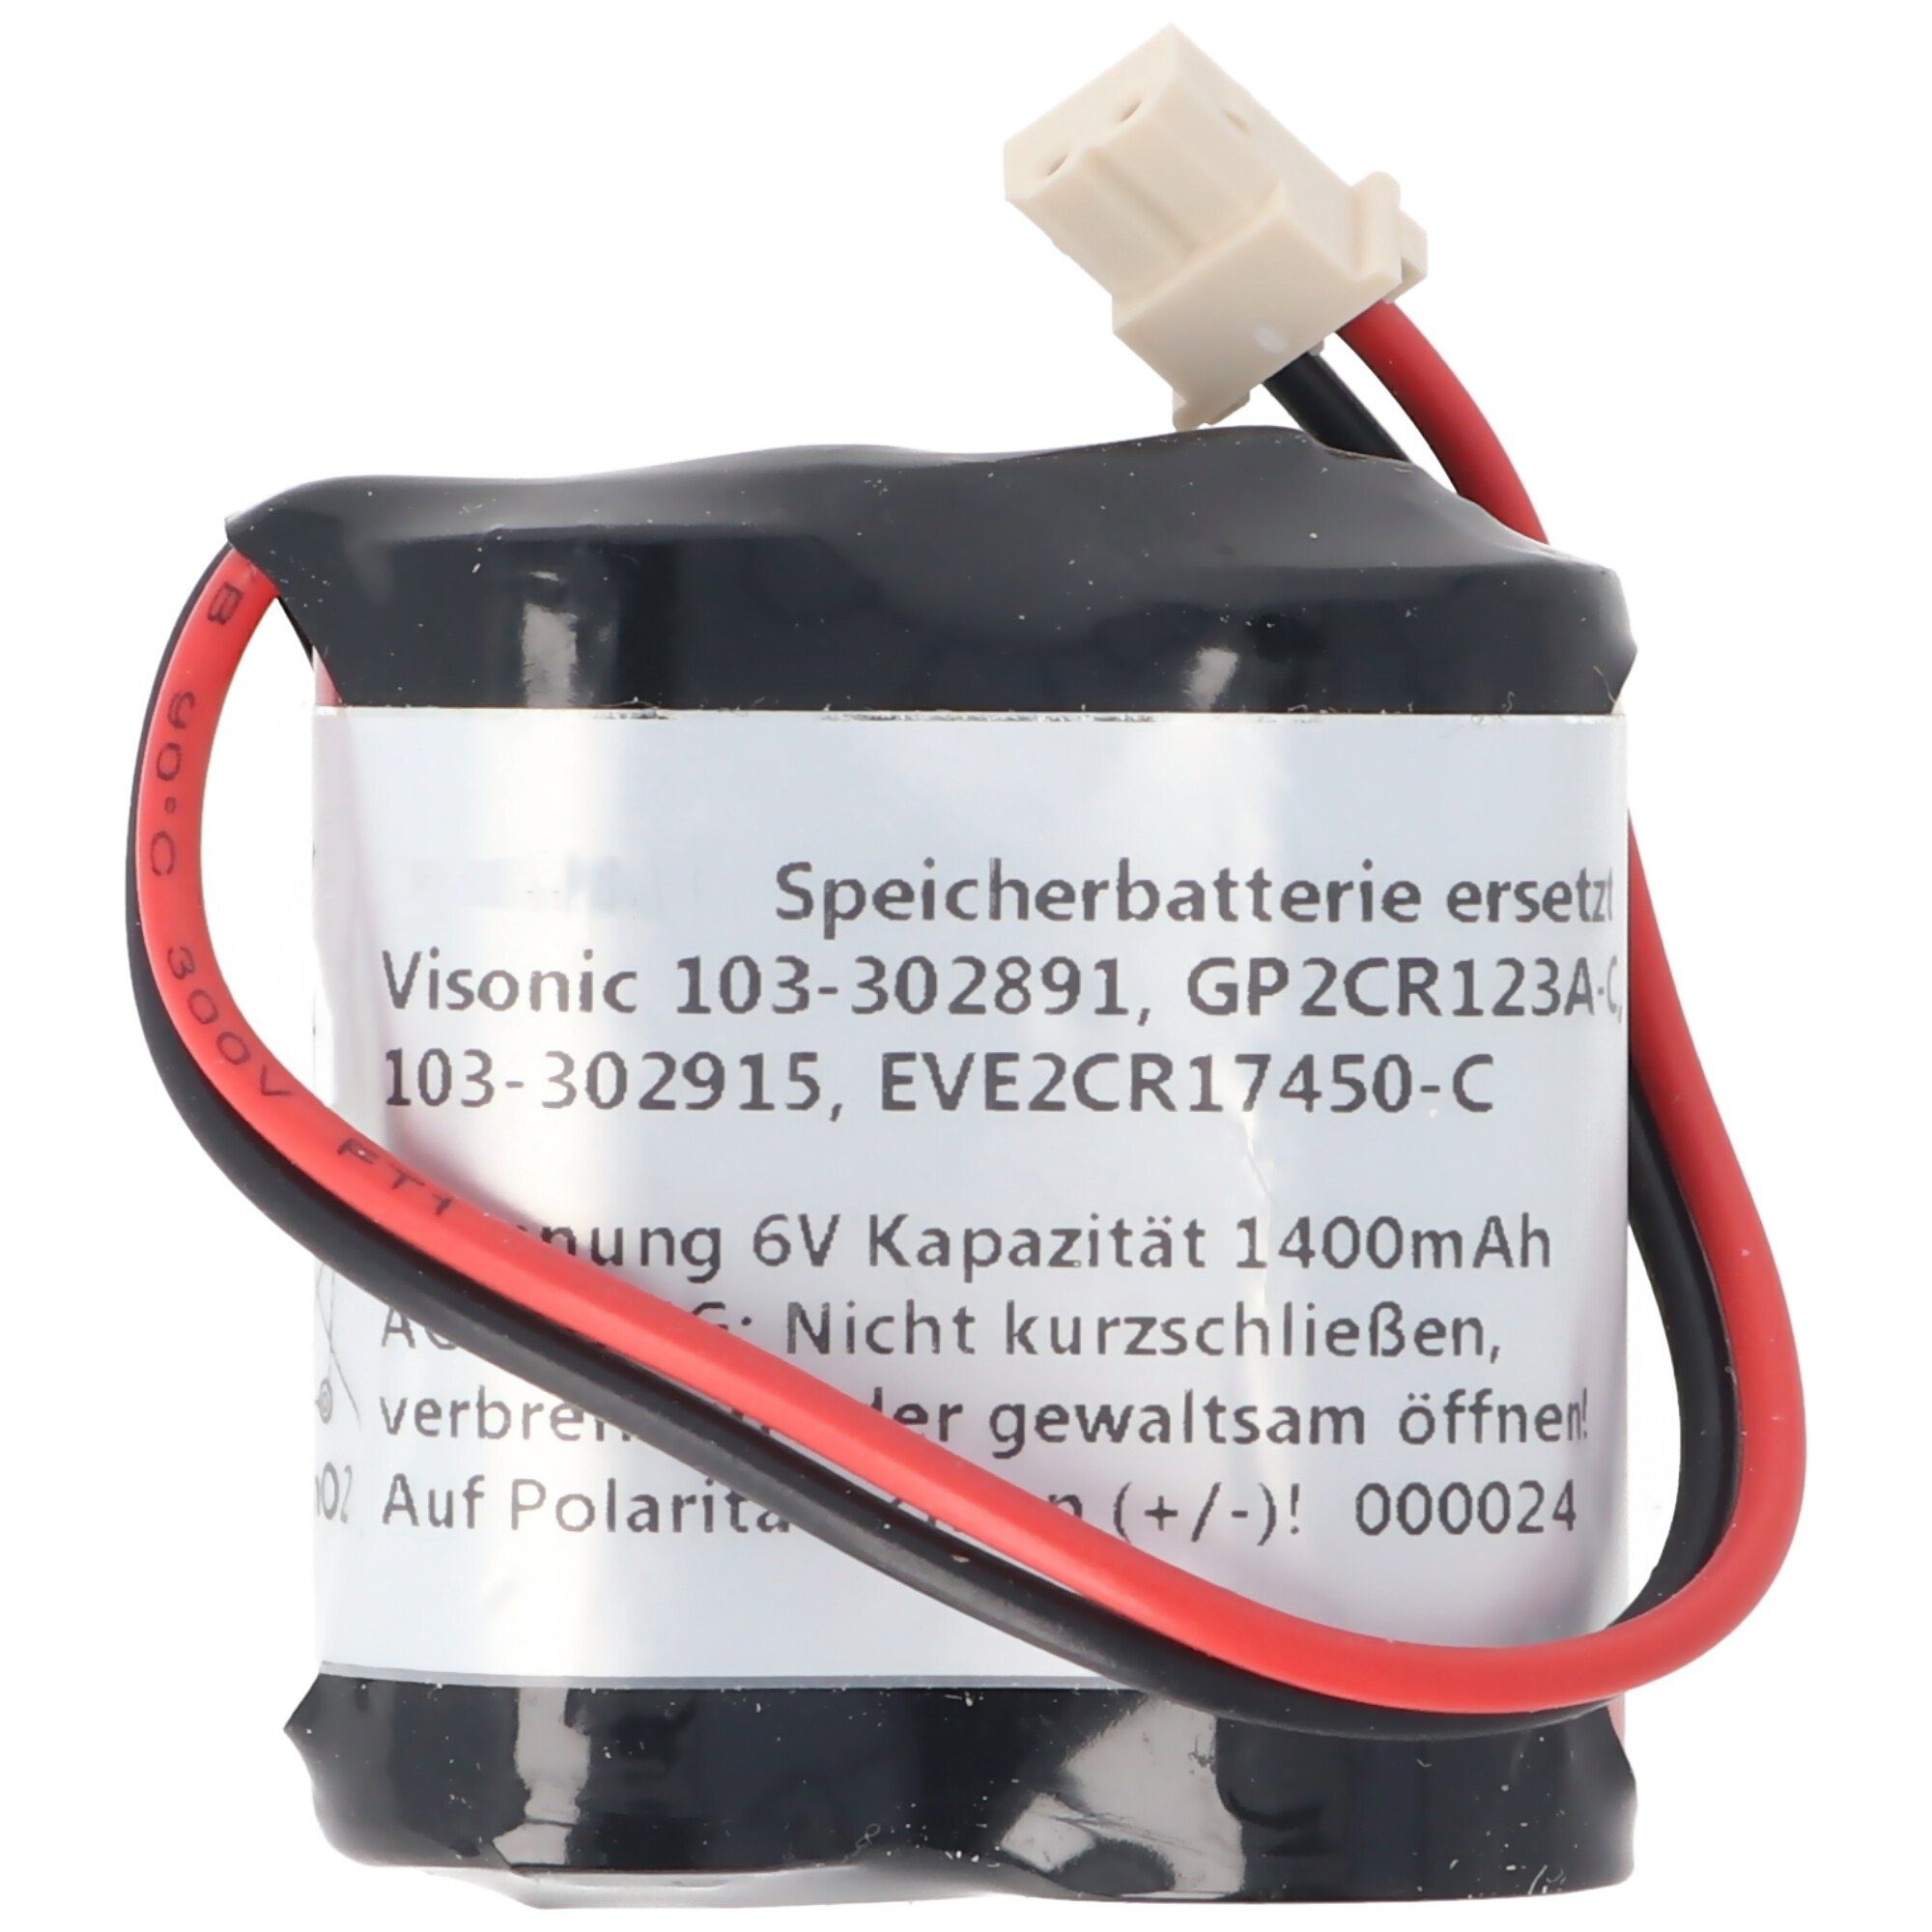 AccuCell Batterie passend für Visonic Batt 103-302915, (6,0 V) GP2CR123A-C Batterie, 103-302891